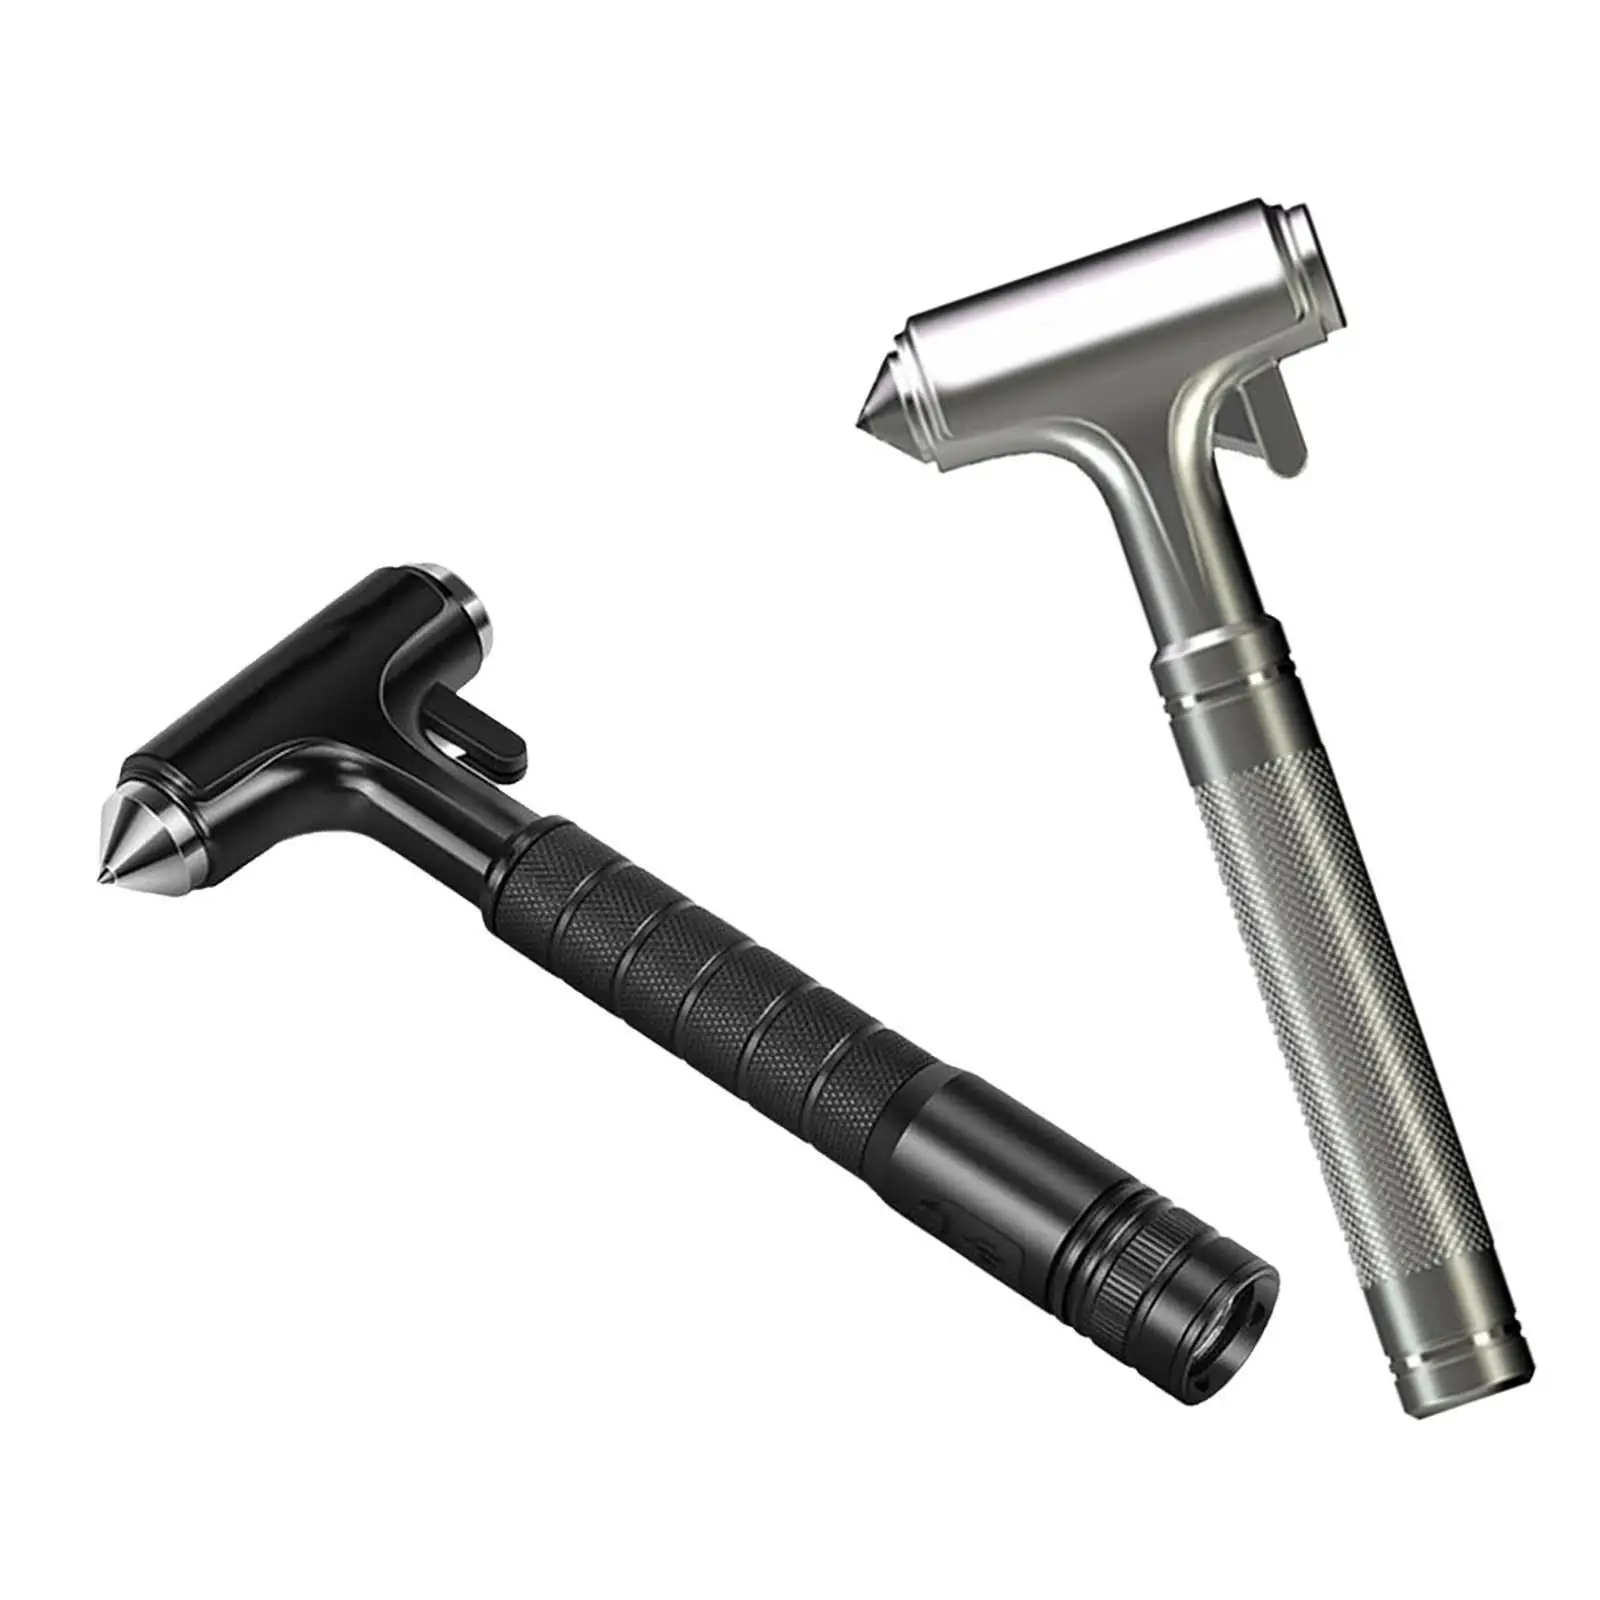 Car Safety Hammer, Seatbelt Cutter Escape Kit, Supplies Auto Multi Function